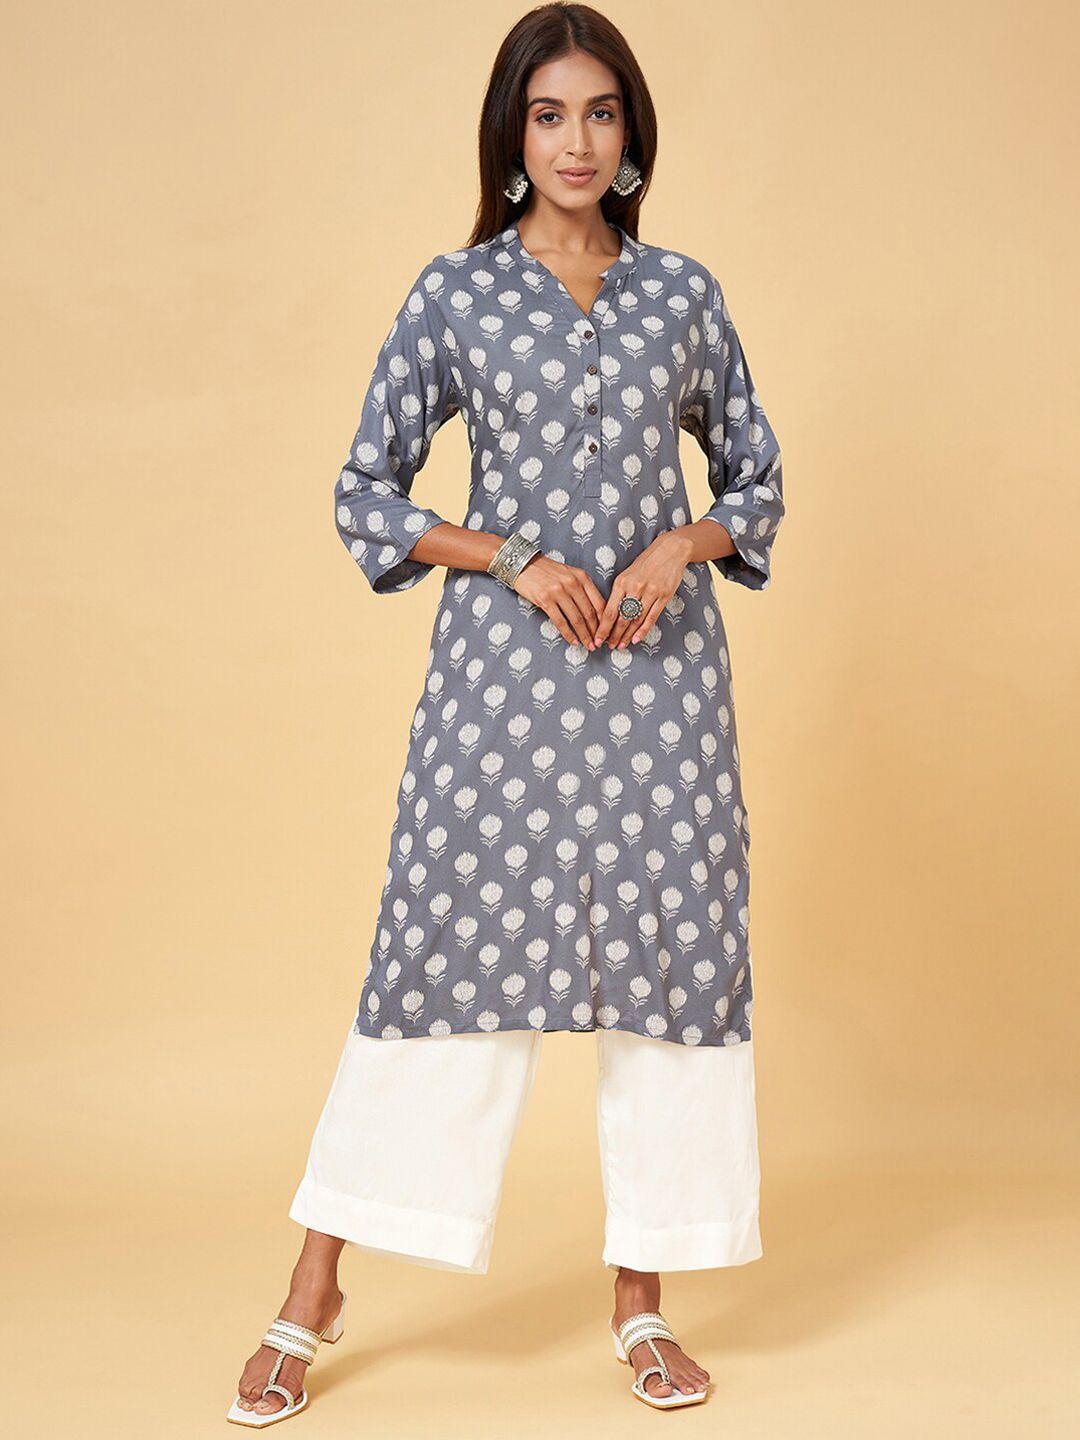 rangmanch-by-pantaloons-ethnic-motifs-printed-mandarin-collar-kurta